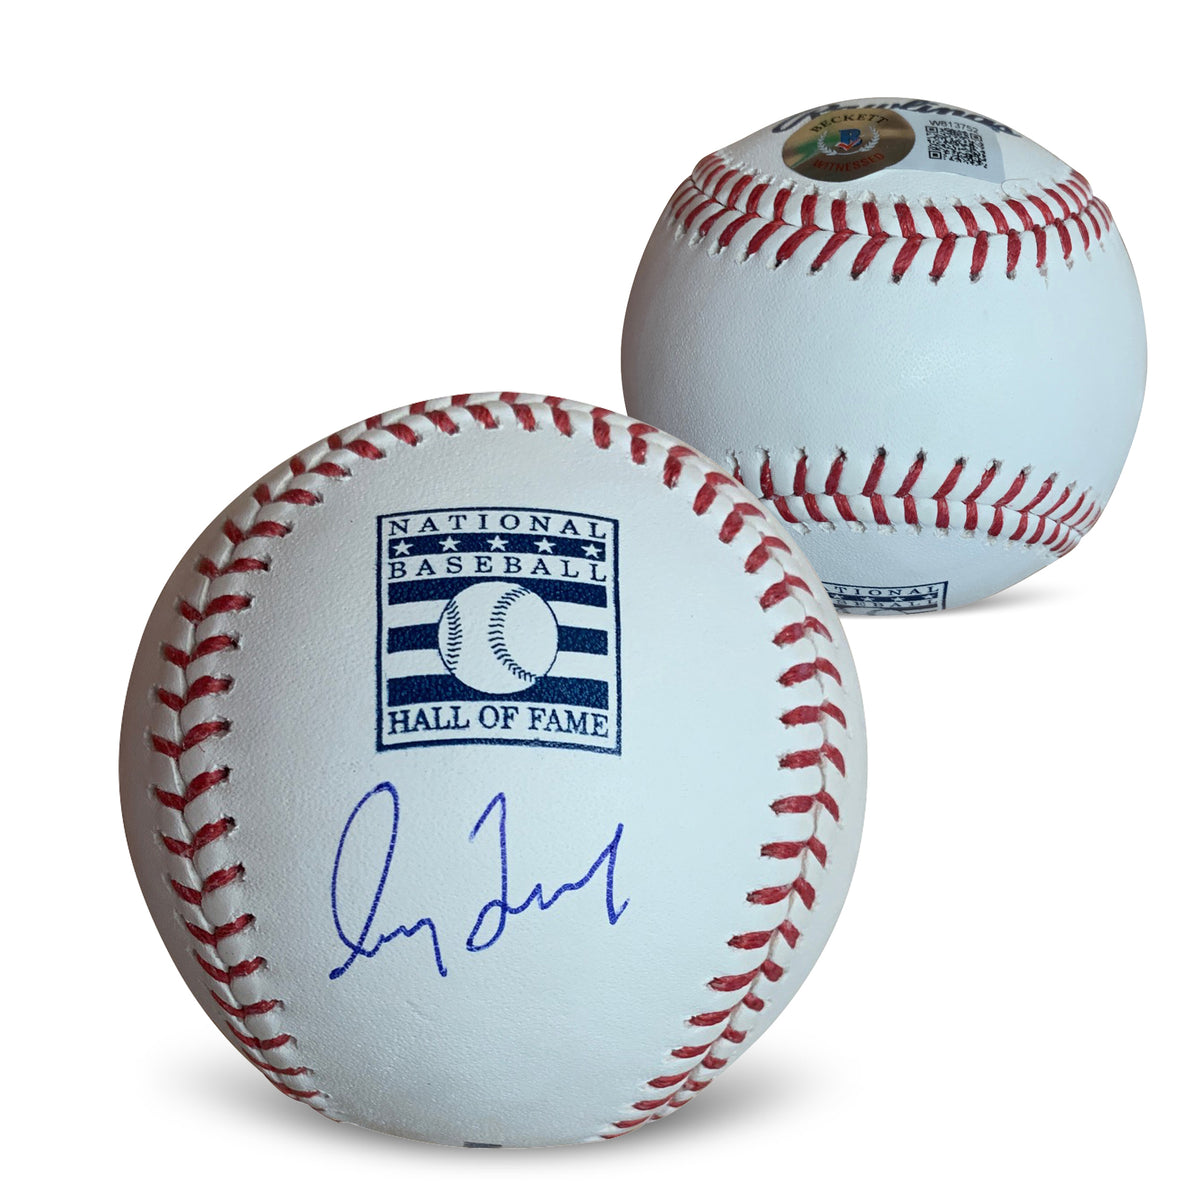 Greg Maddux Autographed Atlanta Braves Signed Majestic Baseball Jersey